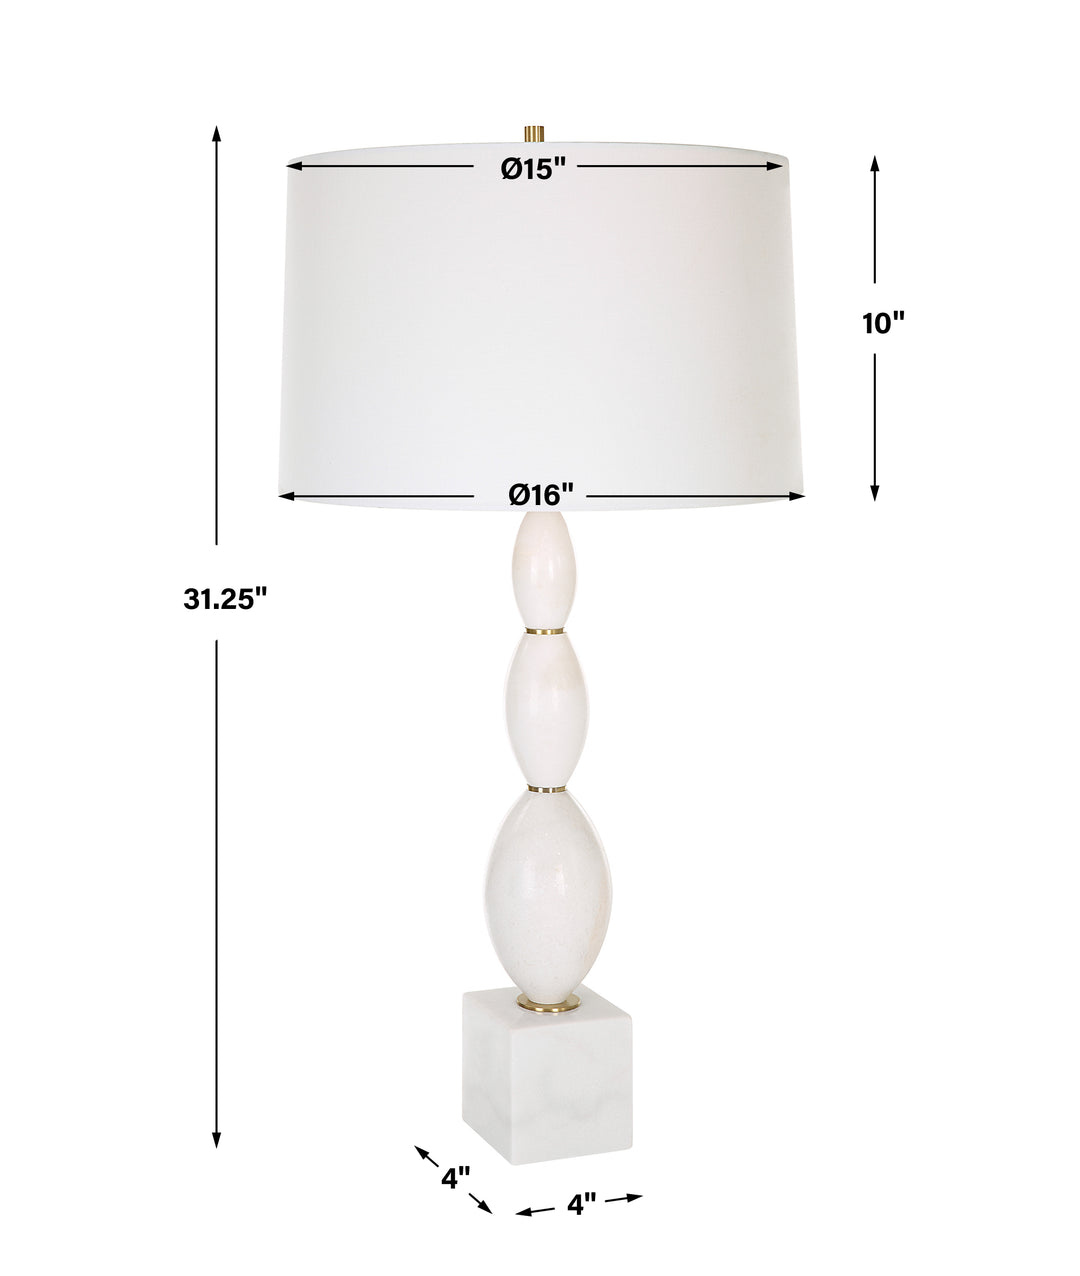 Regalia White Marble Table Lamp